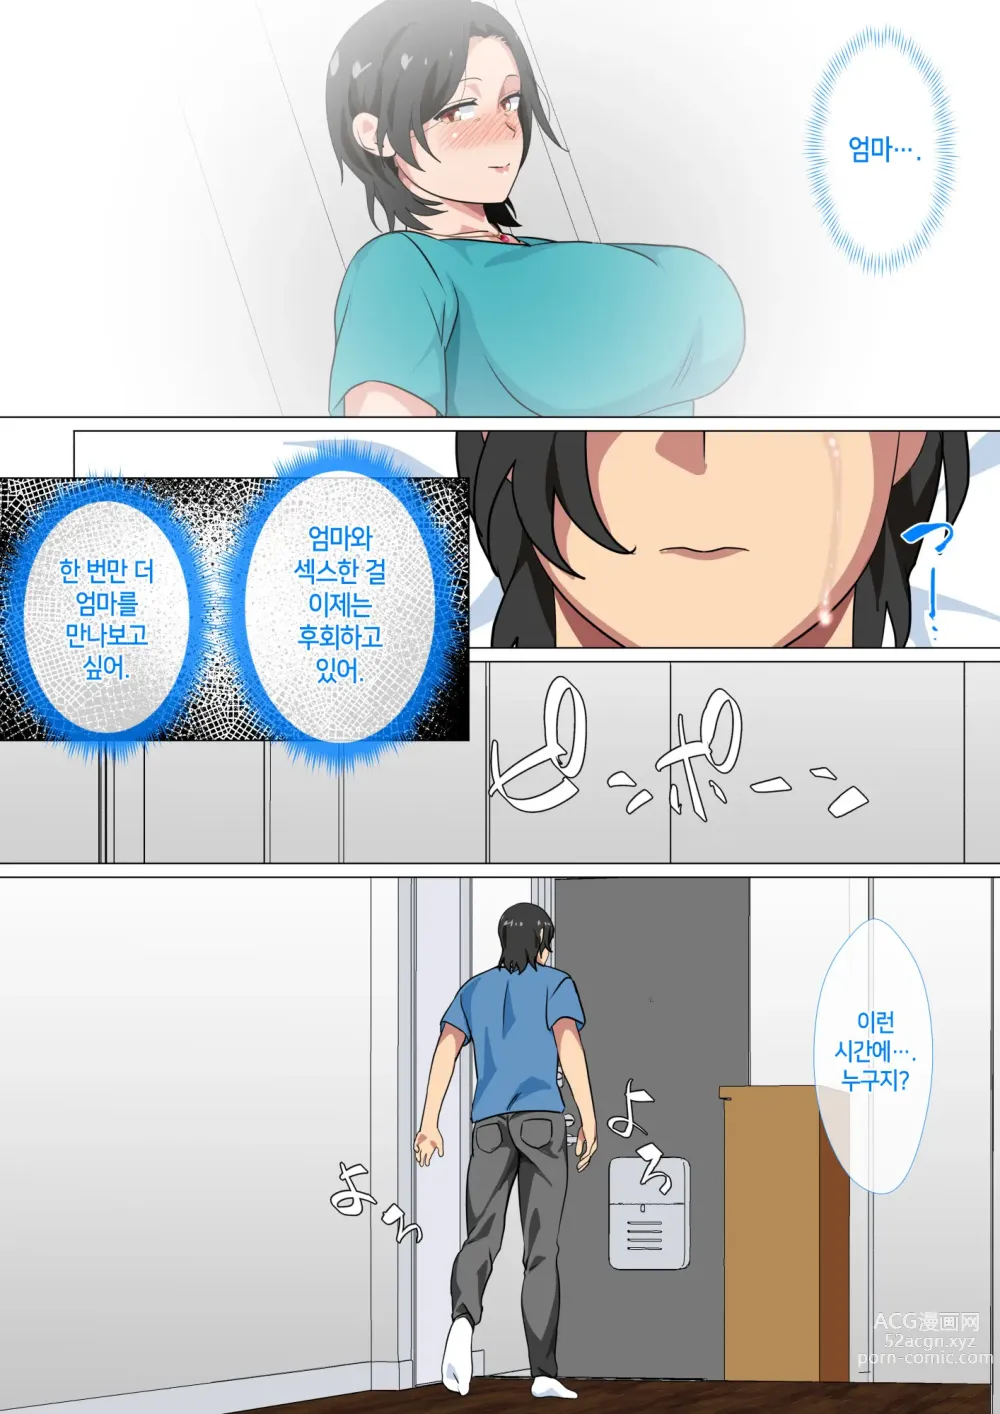 Page 6 of doujinshi 엄마에게 고백했더니 단 하루만 색스를 하게 해준 이야기 2